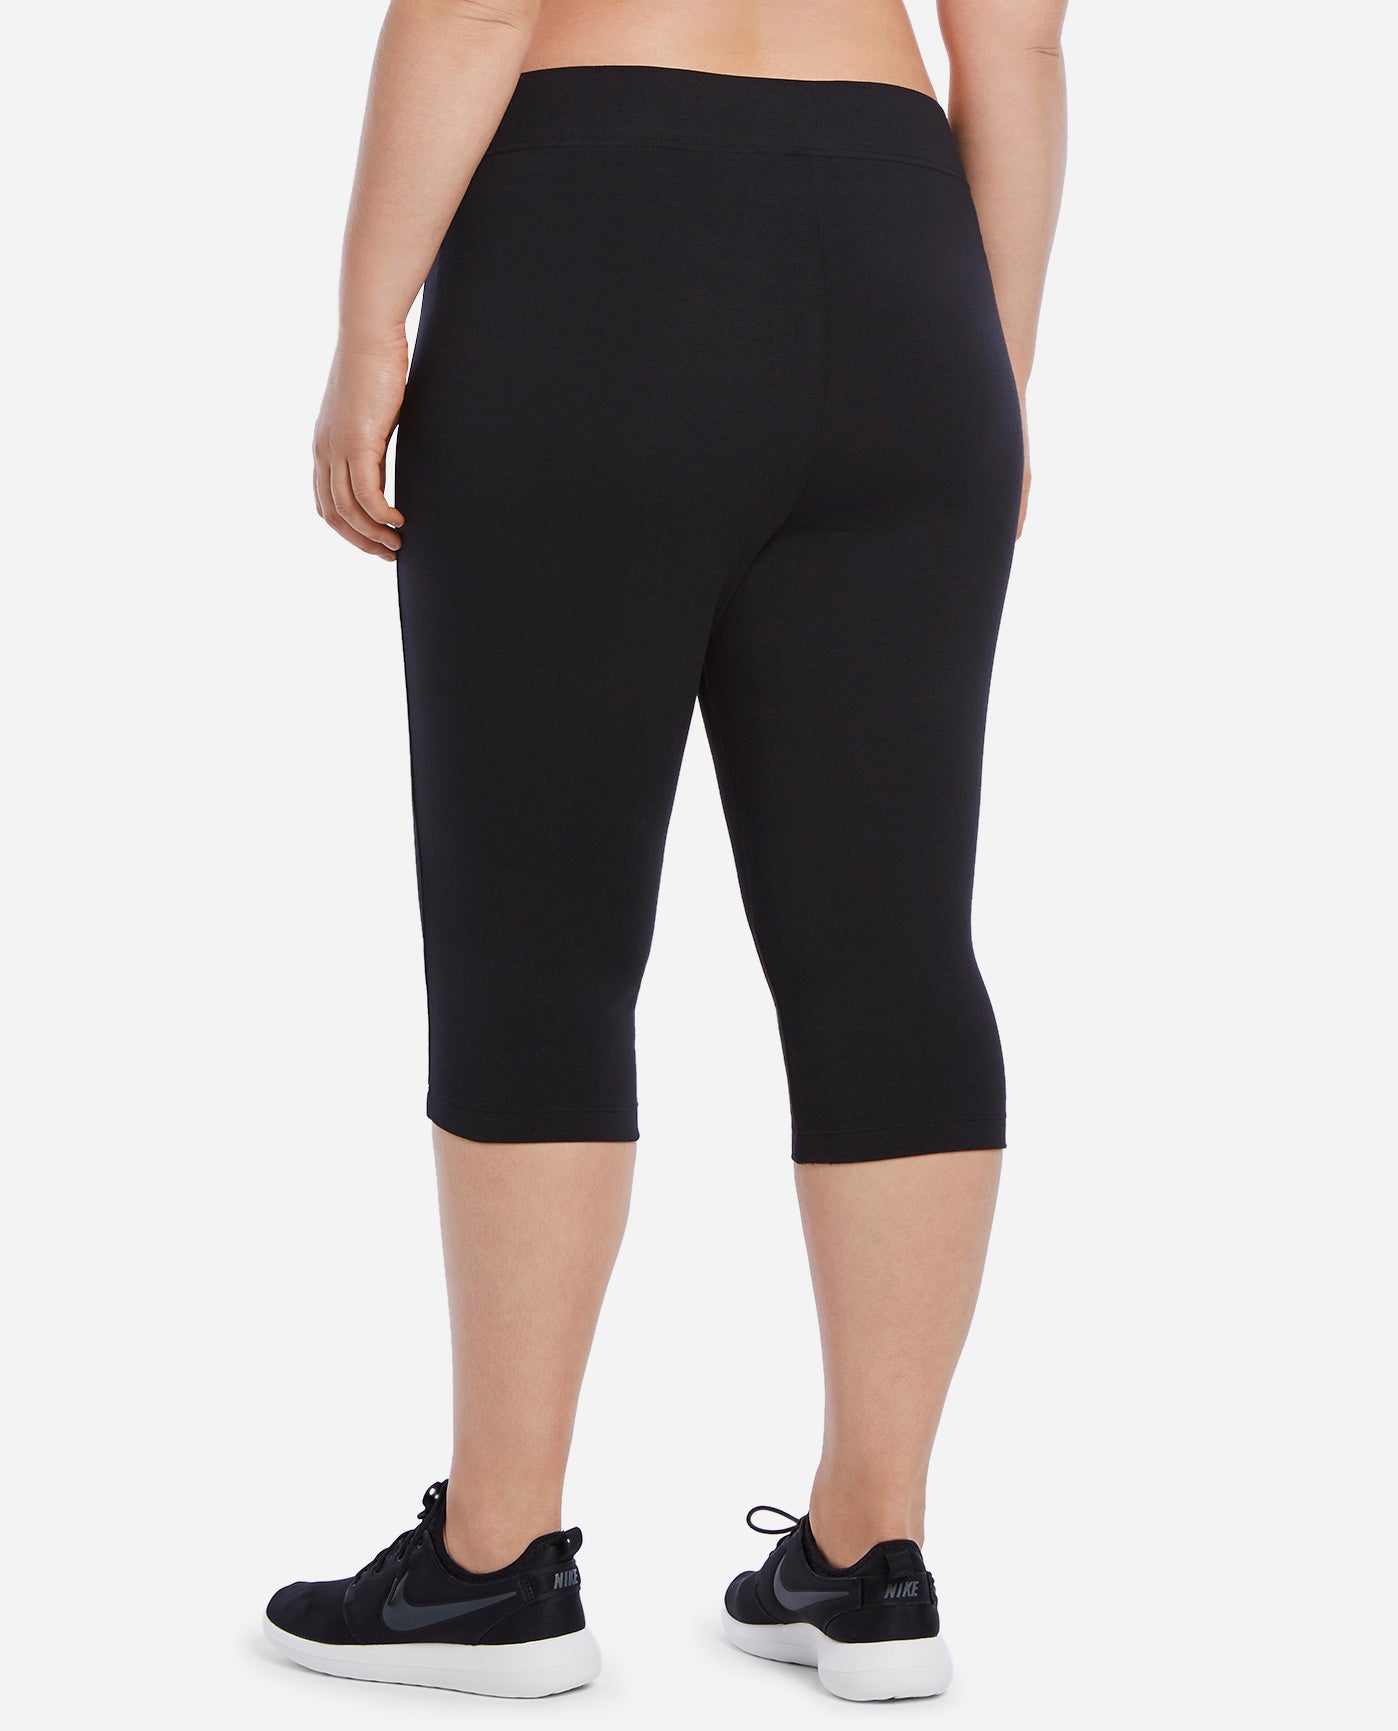 Danskin Now, Pants & Jumpsuits, Spandex Danskin Now Yoga Pants Calf  Length